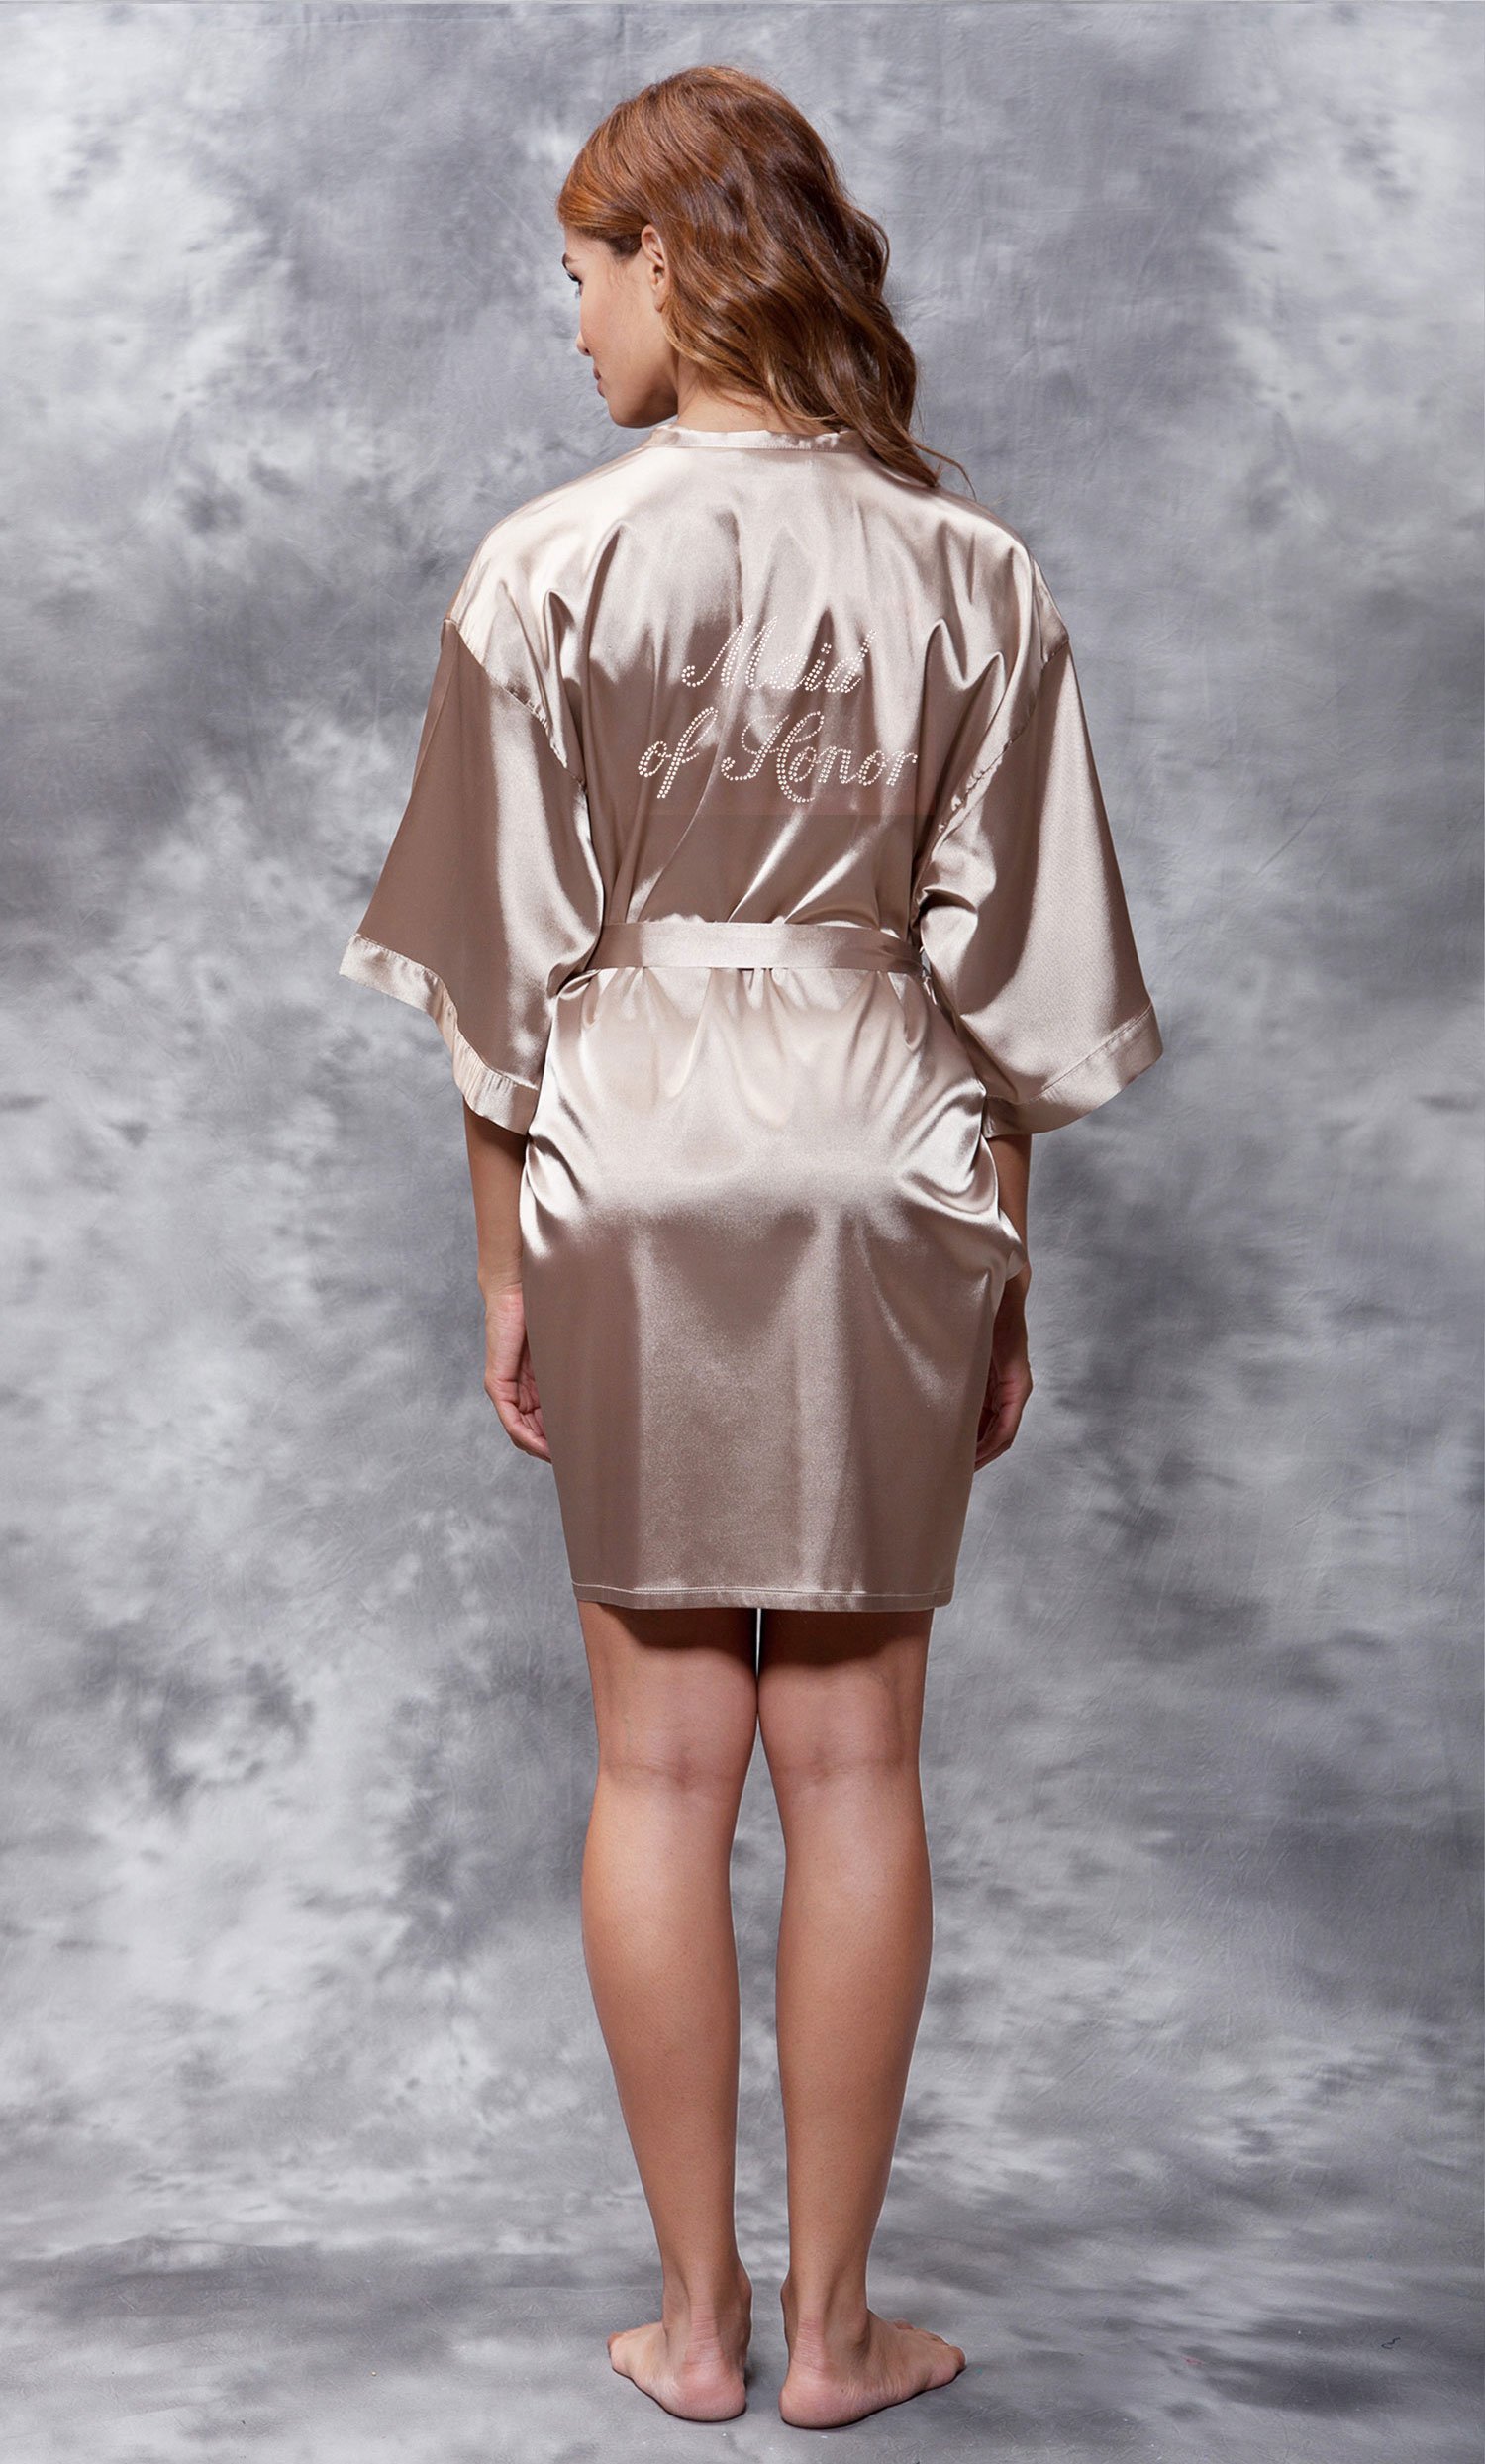 CLEARANCE Maid of Honor Clear Rhinestone Satin Kimono Short Robe- Final Sale-Robemart.com